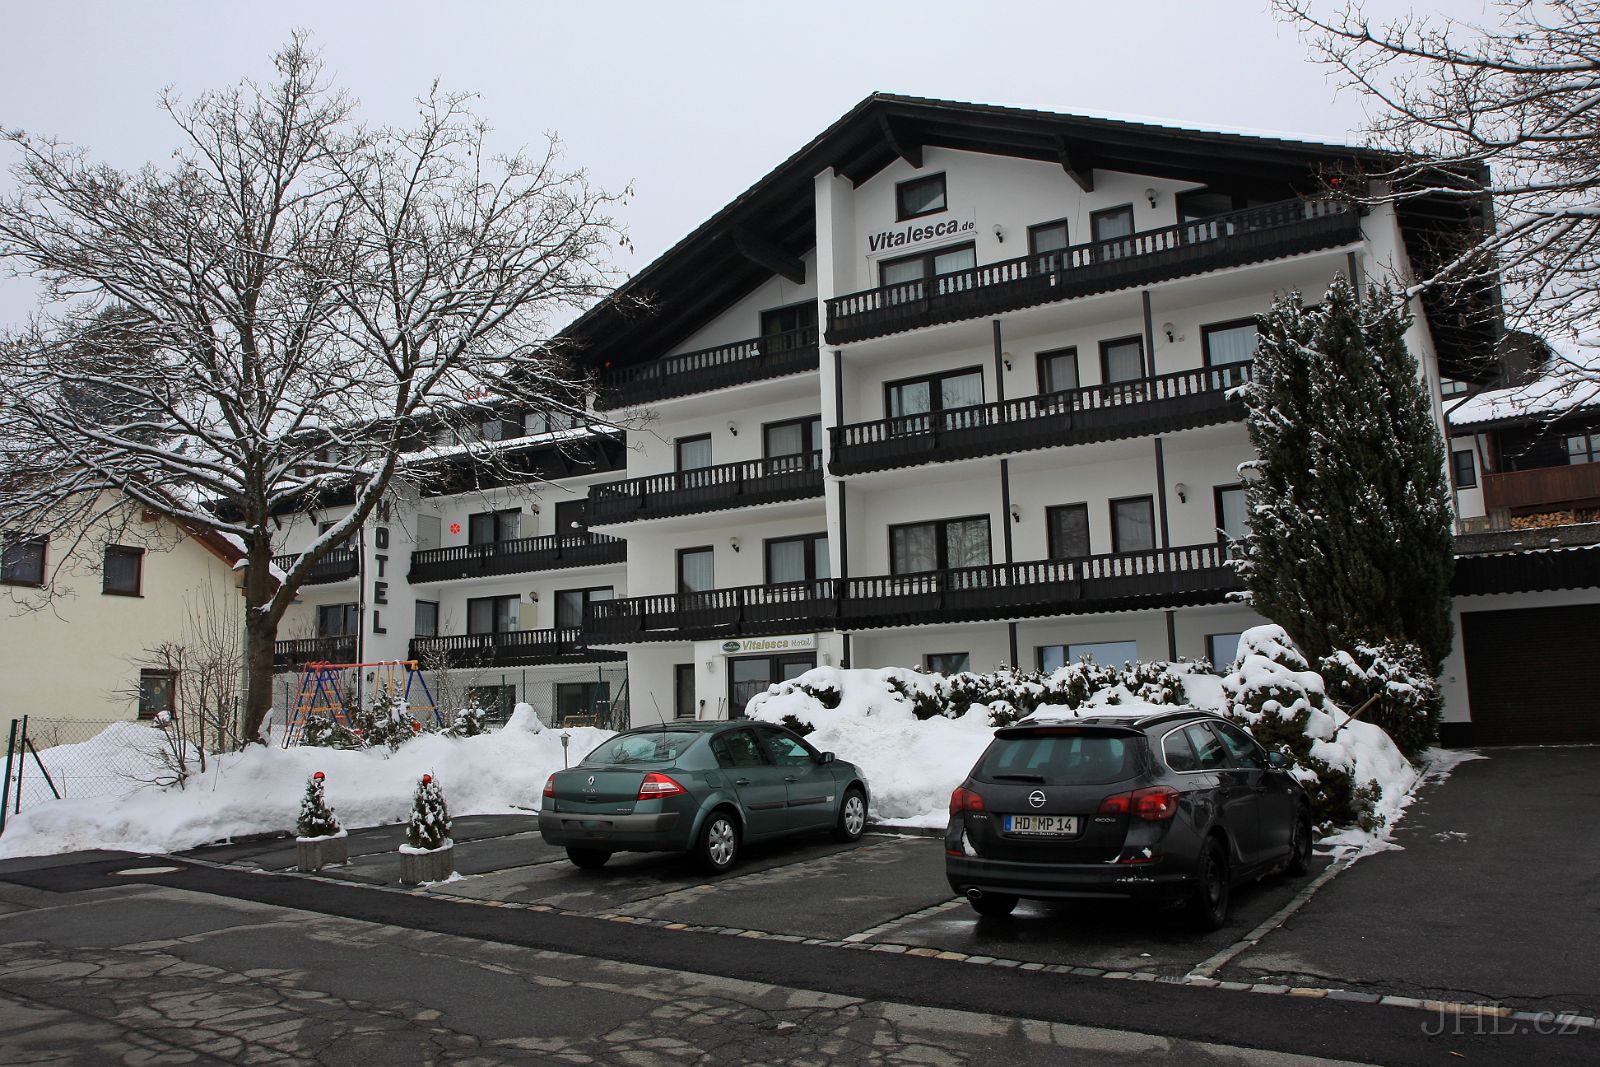 130224cc007.JPG - hotel Vitalesca, Neuschönau (www.vitalesca.de)